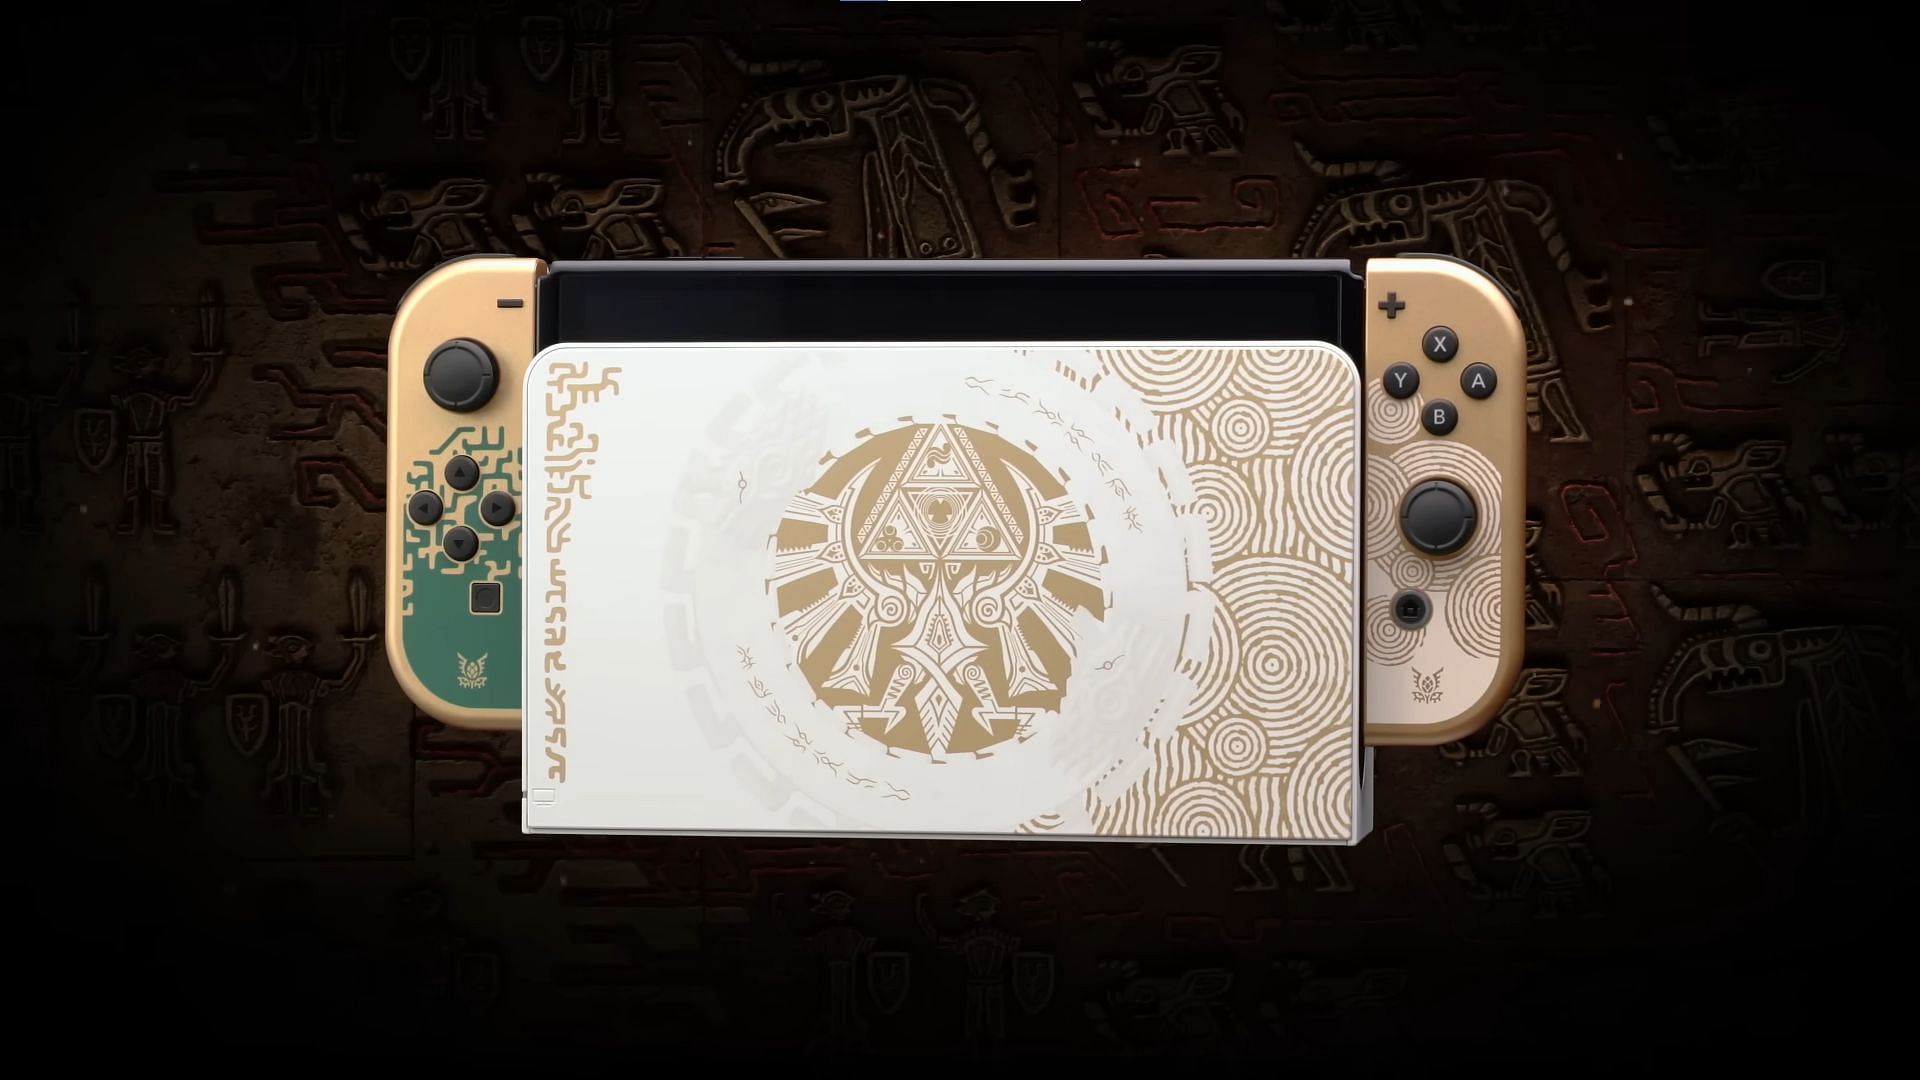 Nintendo Switch The Legend of Zelda Edition (Image via Nintendo)